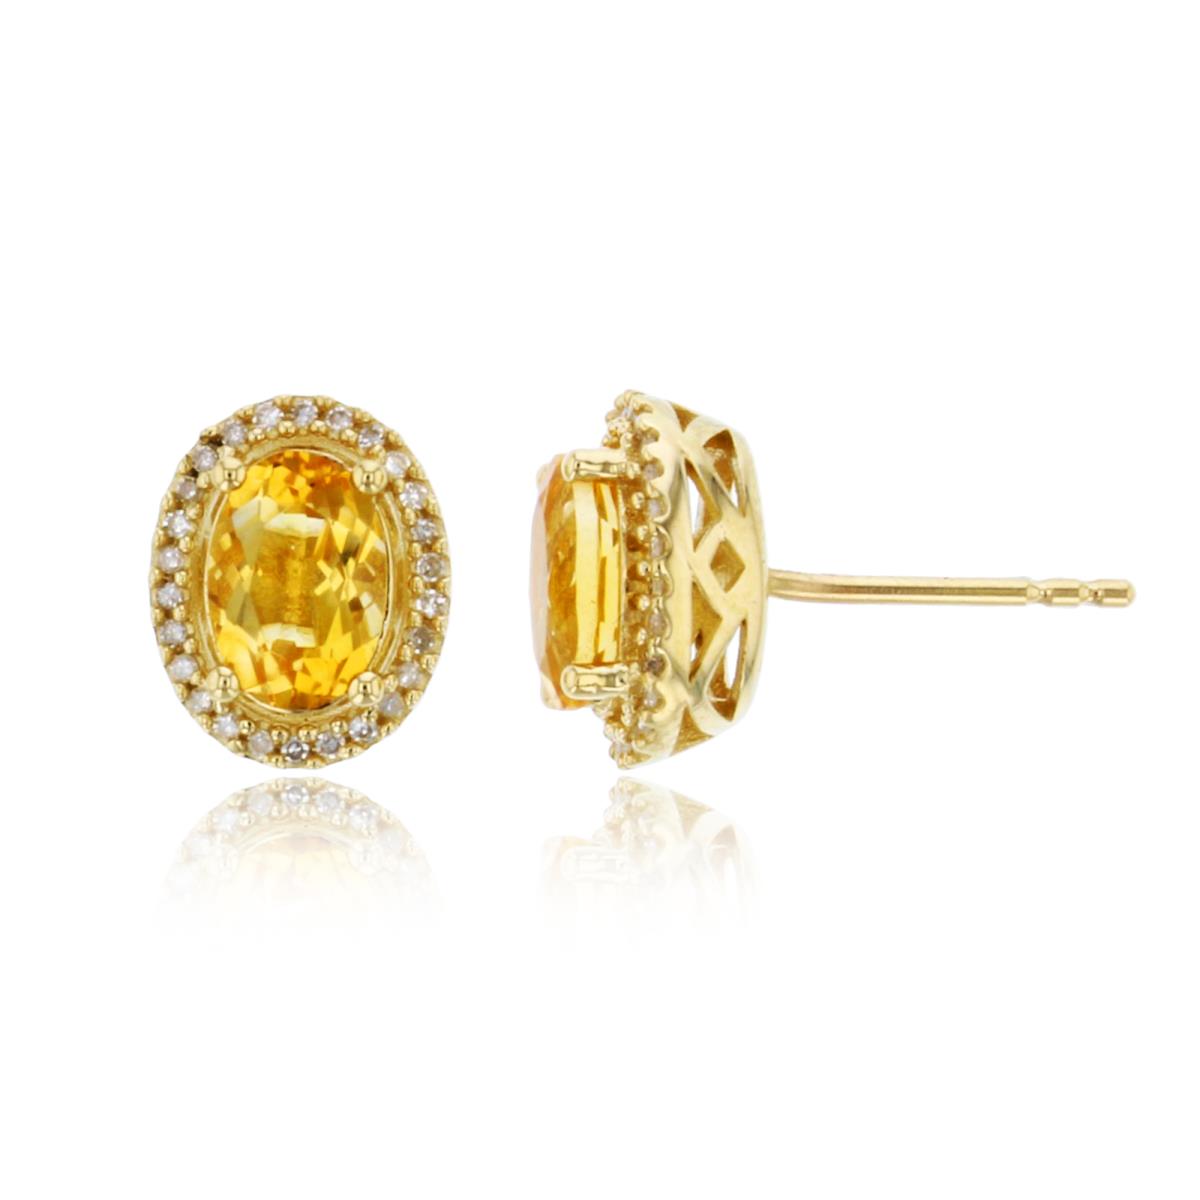 14K Yellow Gold 0.078 Cttw Diamond & 8x6 mm Ov Citrine Halo Earrings